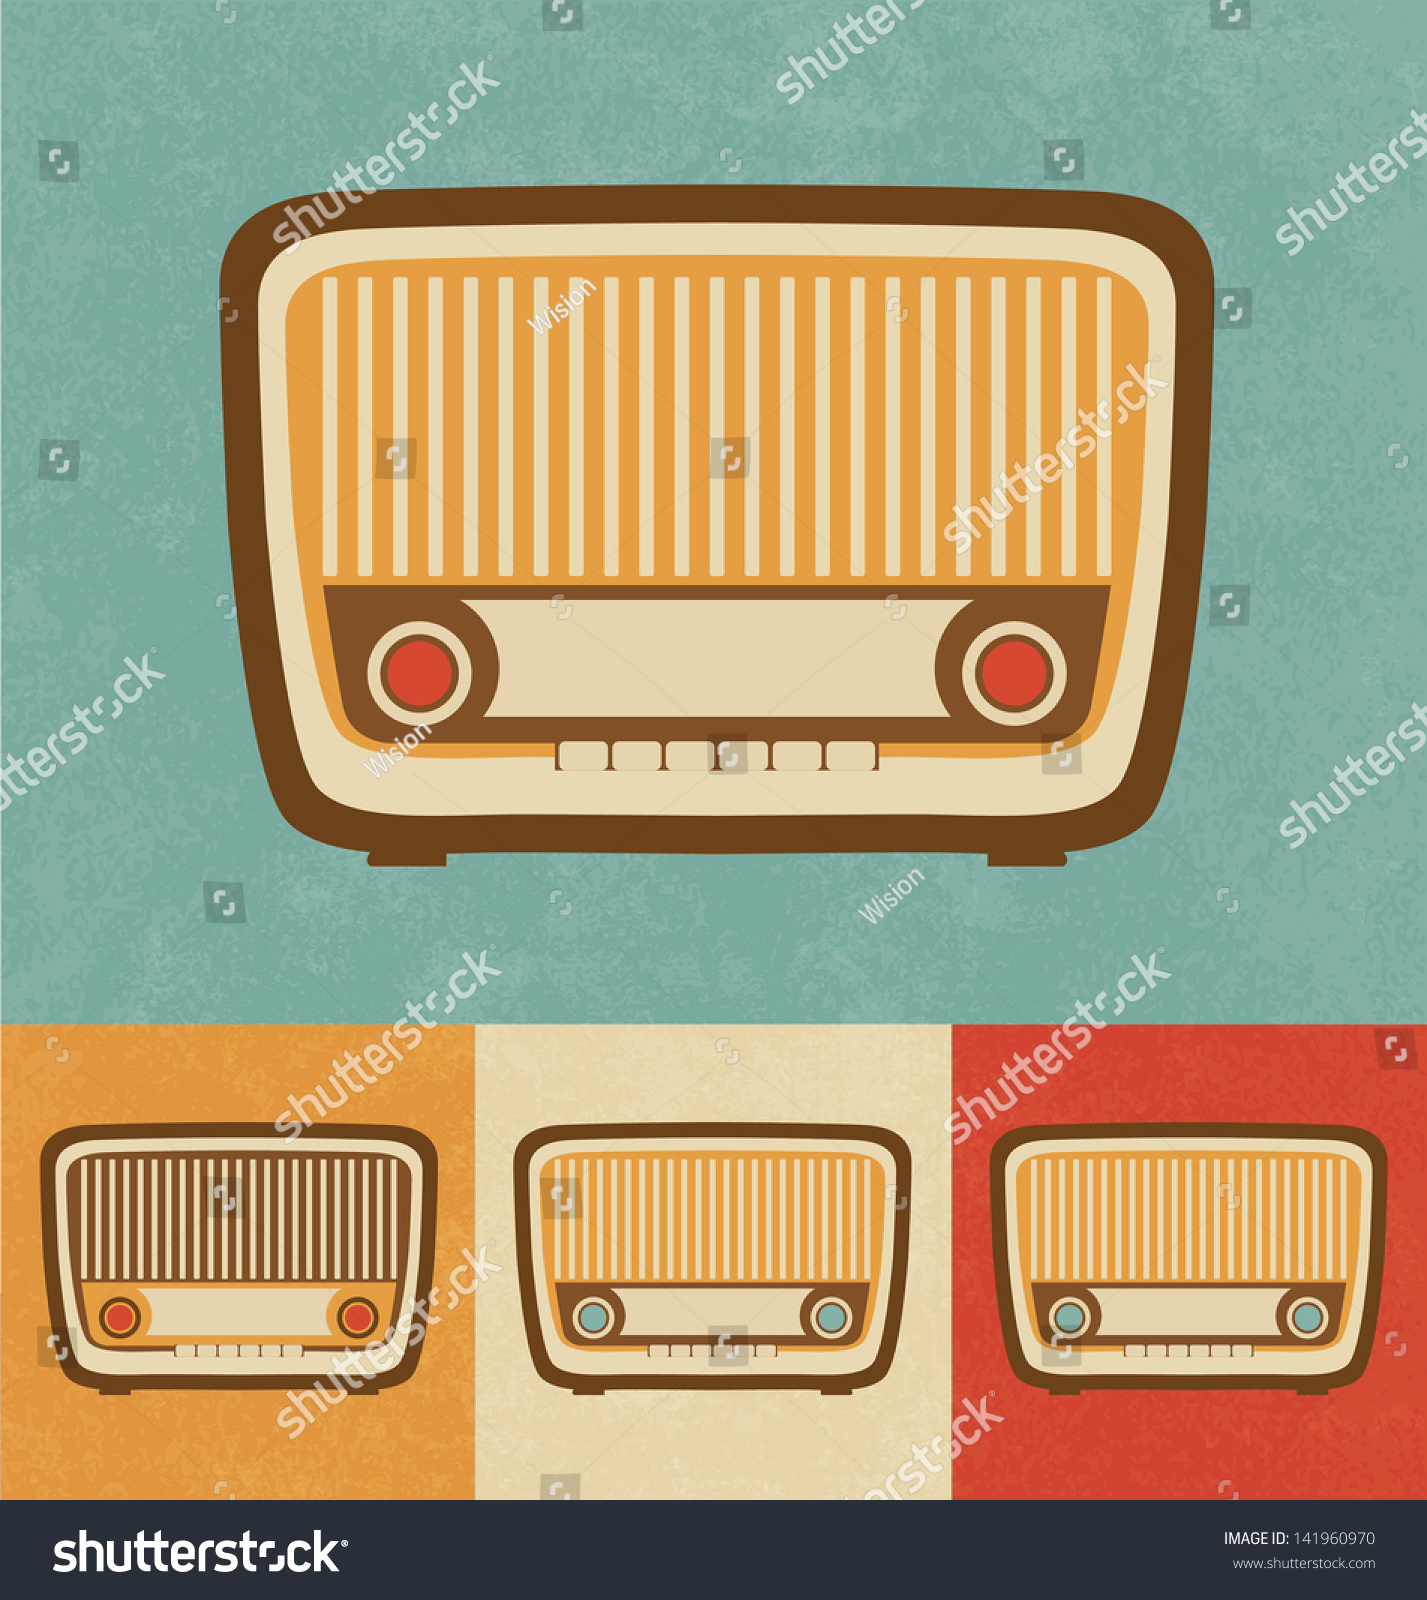 vintage radio clipart - photo #21